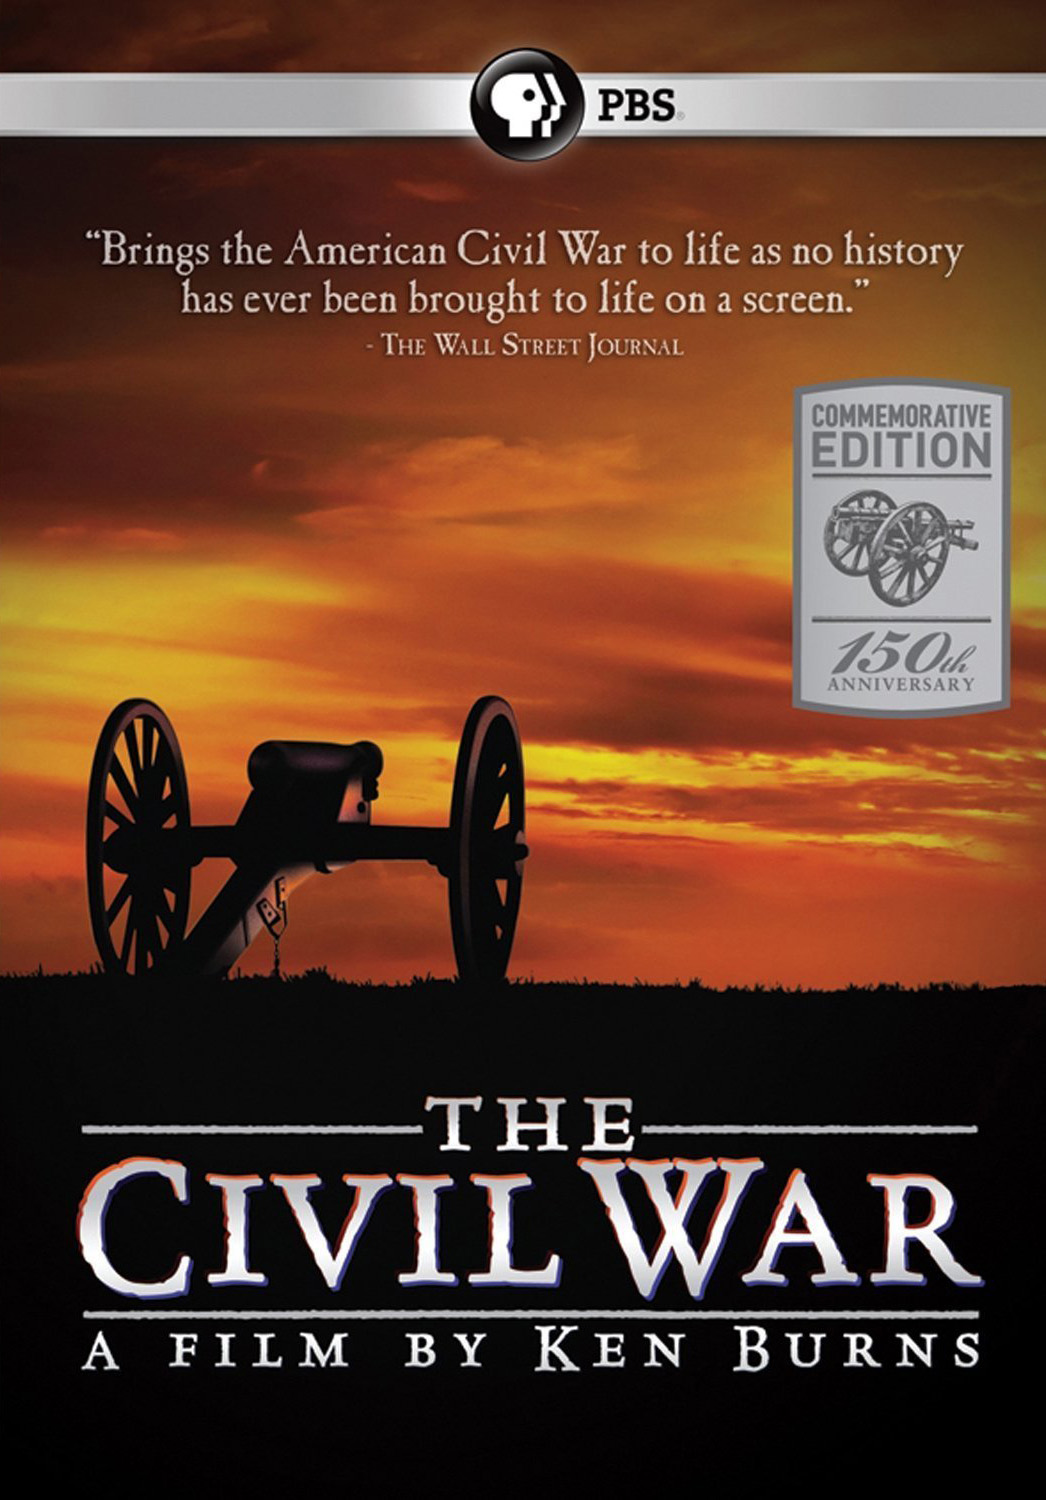 [美国内战].The.Civil.War.EP02-03.1990.BluRay.1080p.AVC.DTS-HD.MA.5.1-TTG    36.39G-2.jpg